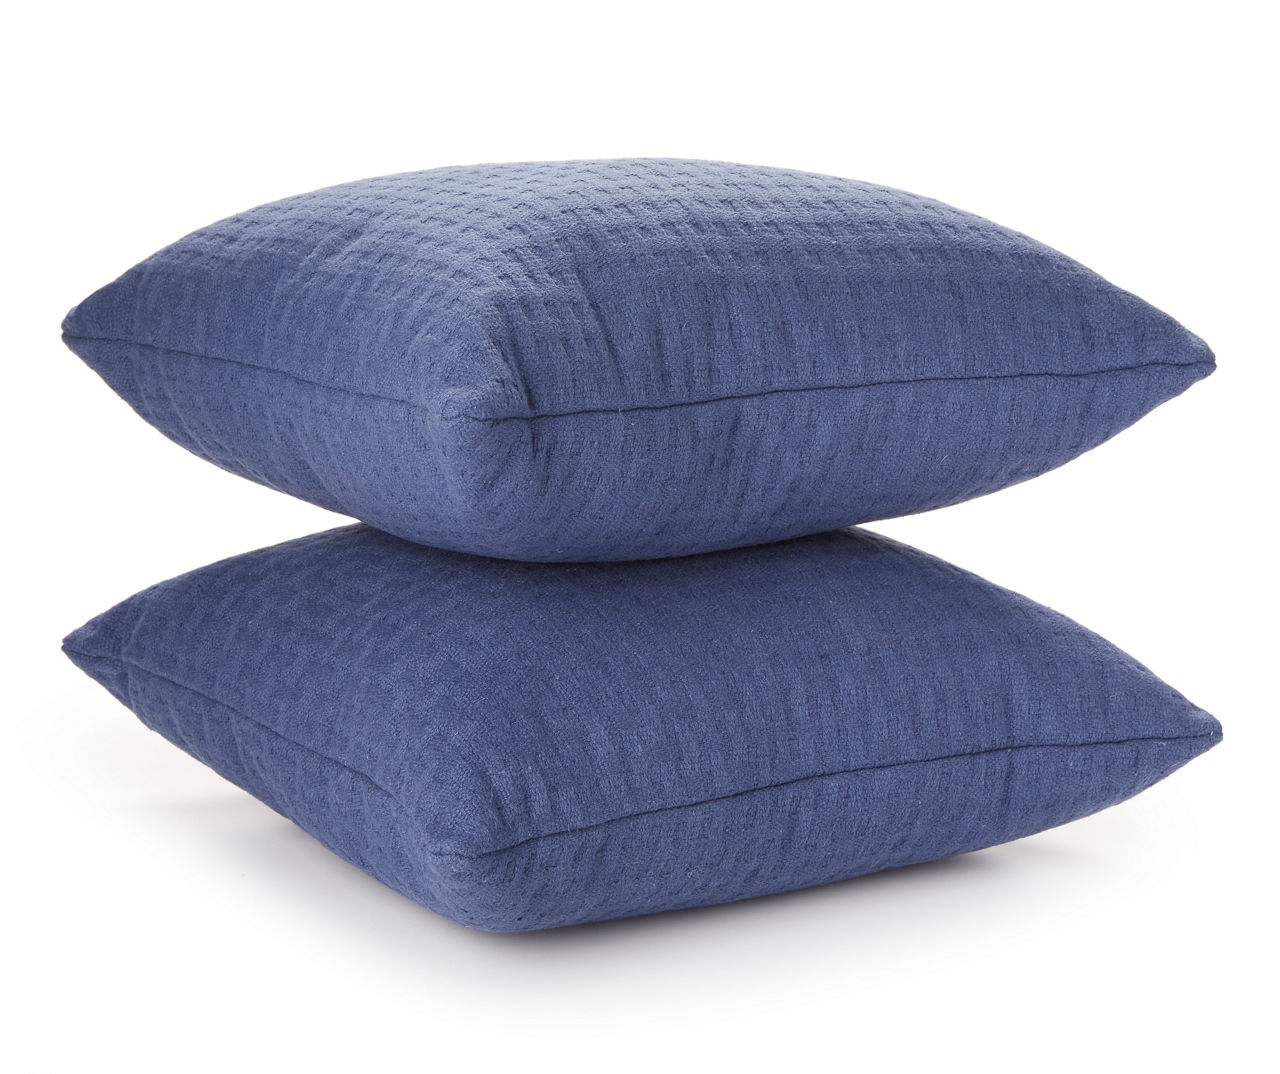 Broyhill Blue Textured Throw Pillows, 2-Pack